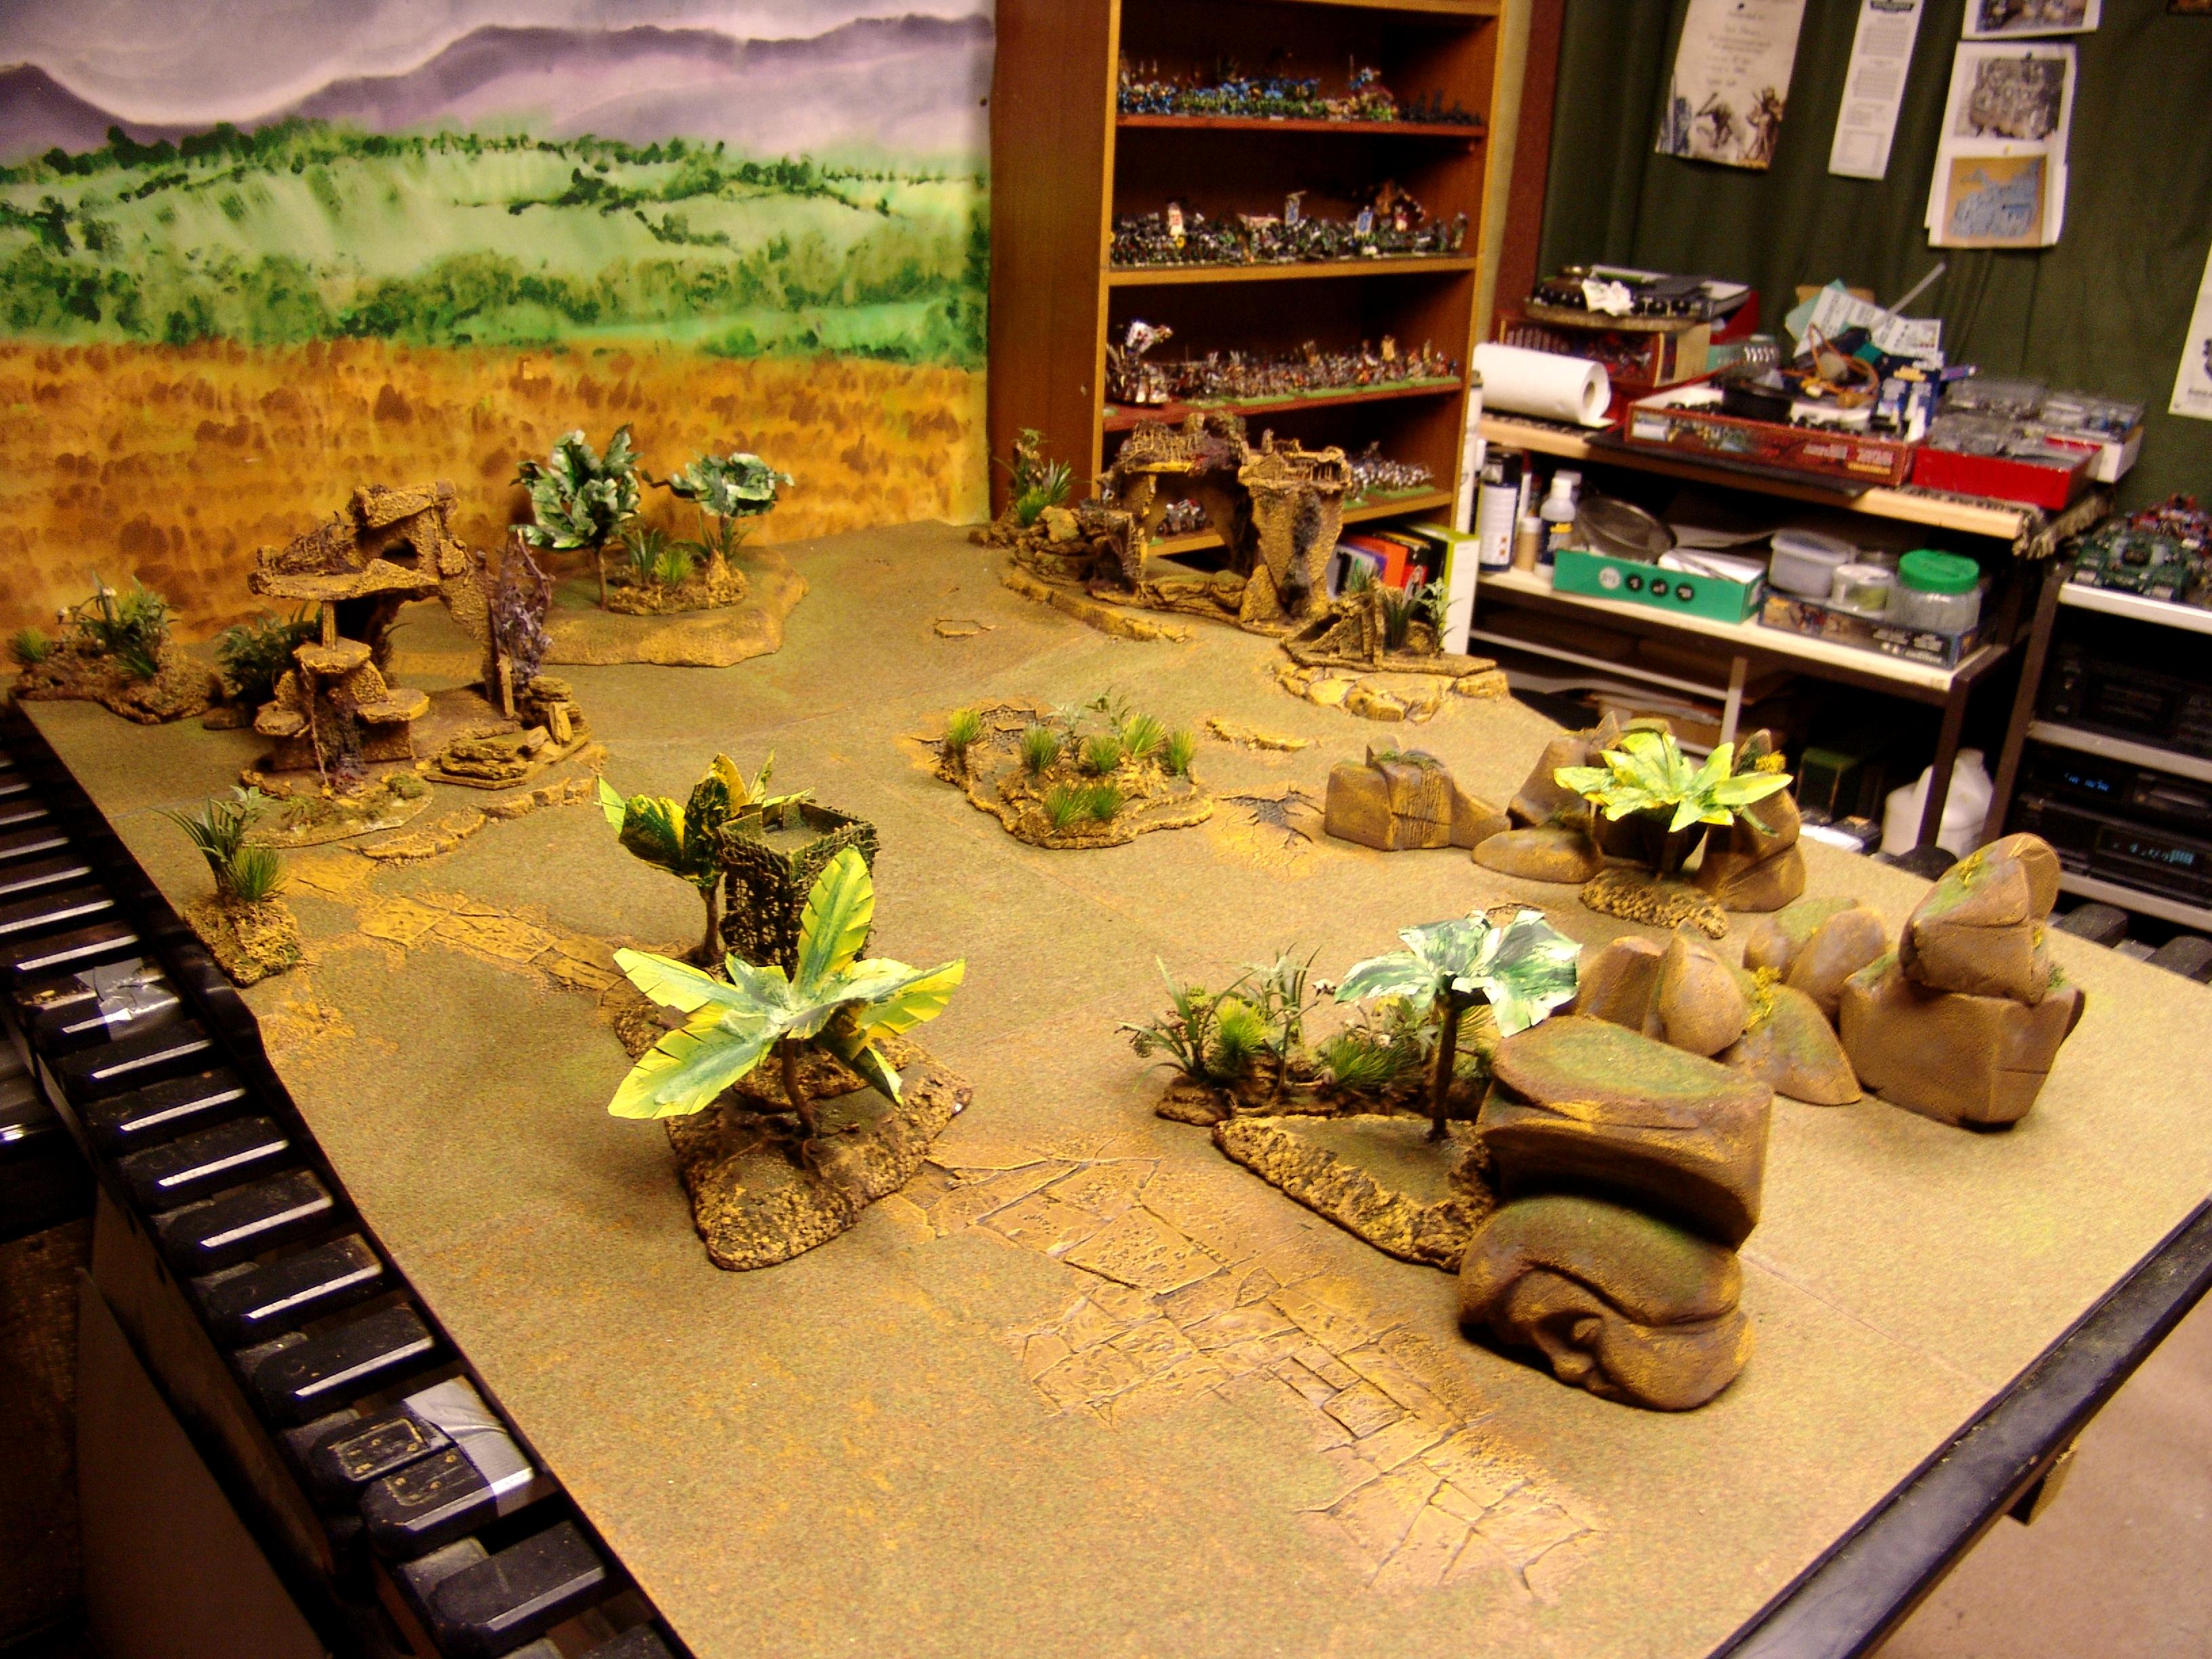 Terrain, terrain set up for jungle